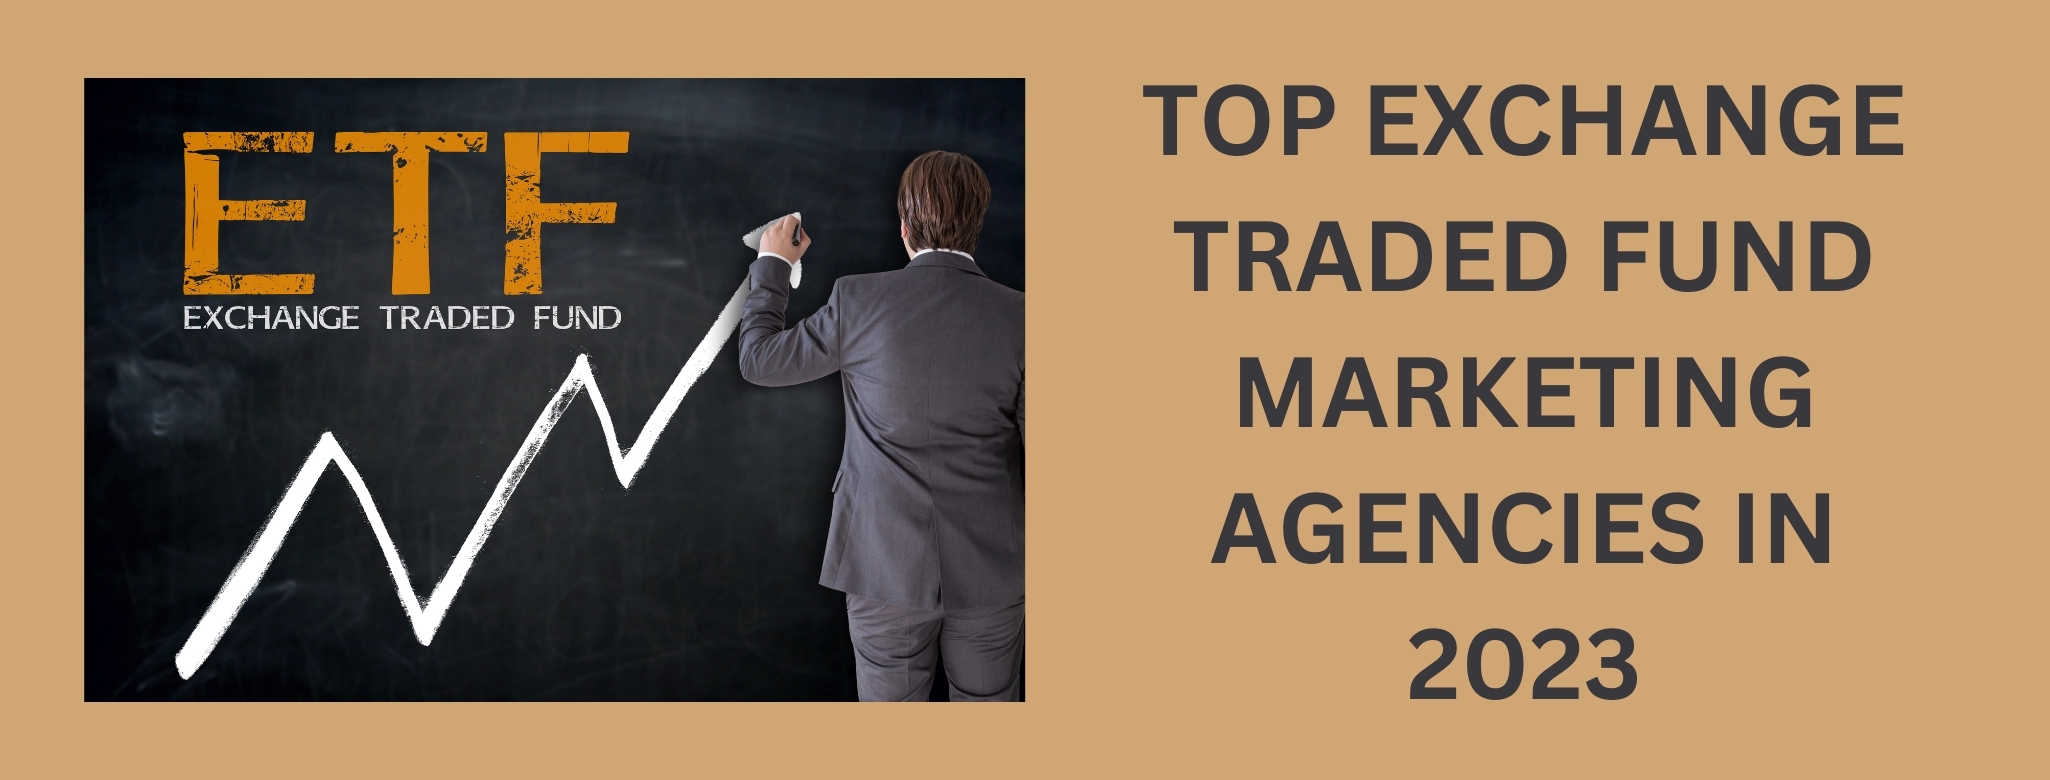 exchange traded fund marketing agencies